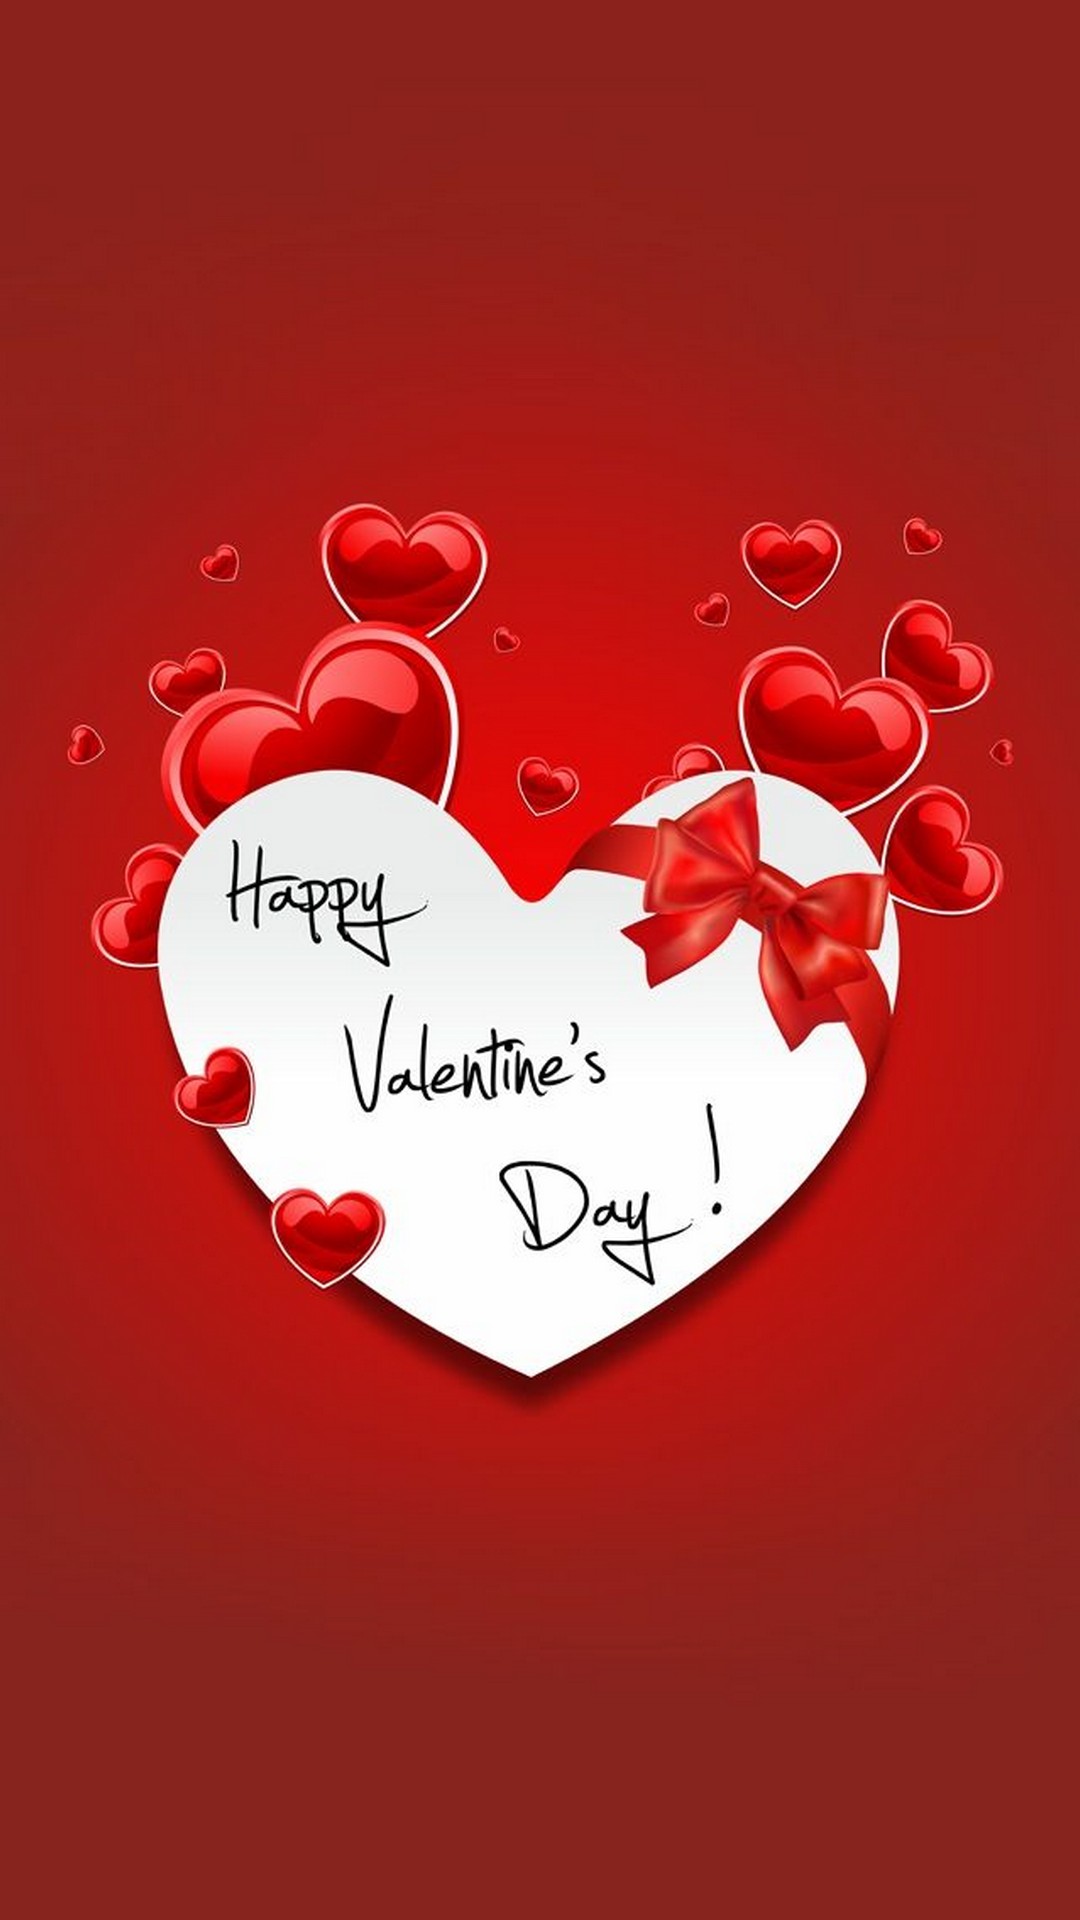 Happy Valentine Day iPhone Wallpaper resolution 1080x1920